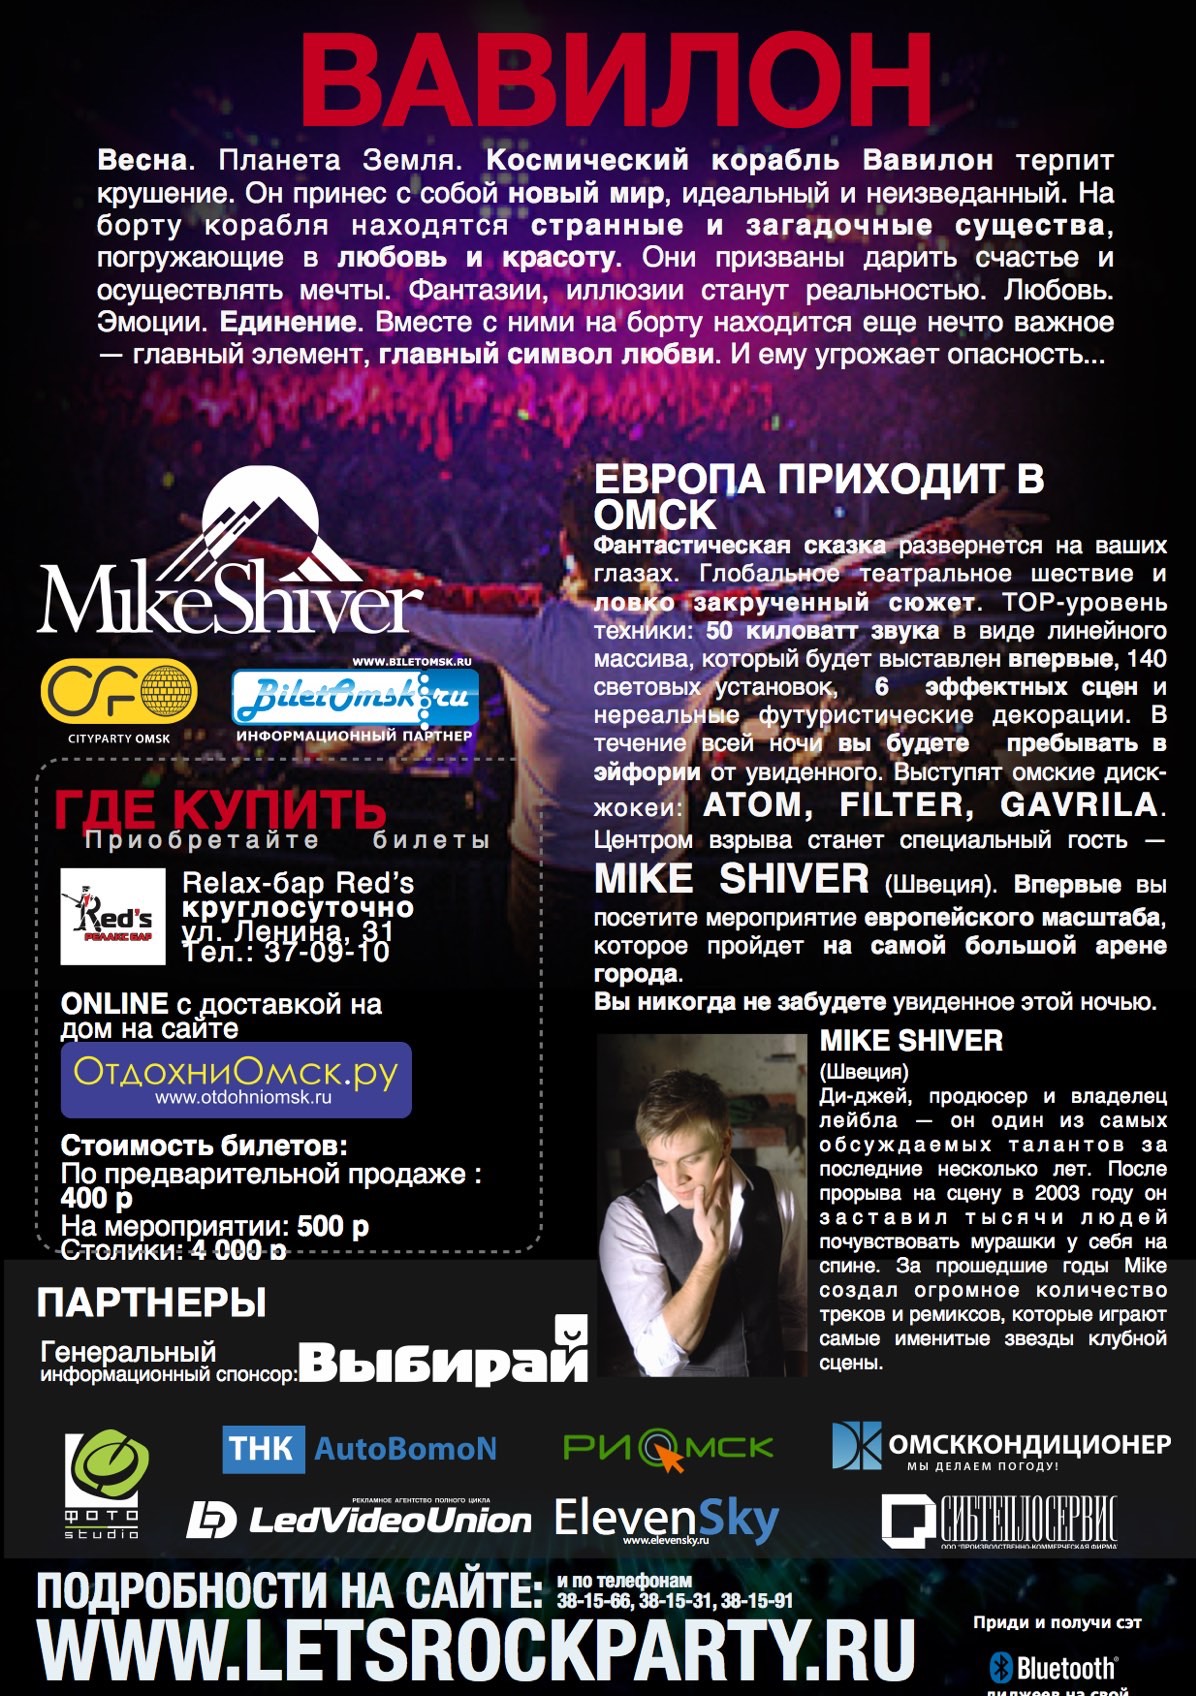 Babylon: Mike Shiver flyer Mega-event at Red Star Stadium 11 aprill 2009 omsk Oleg Borisov Omsk Moscow Russia